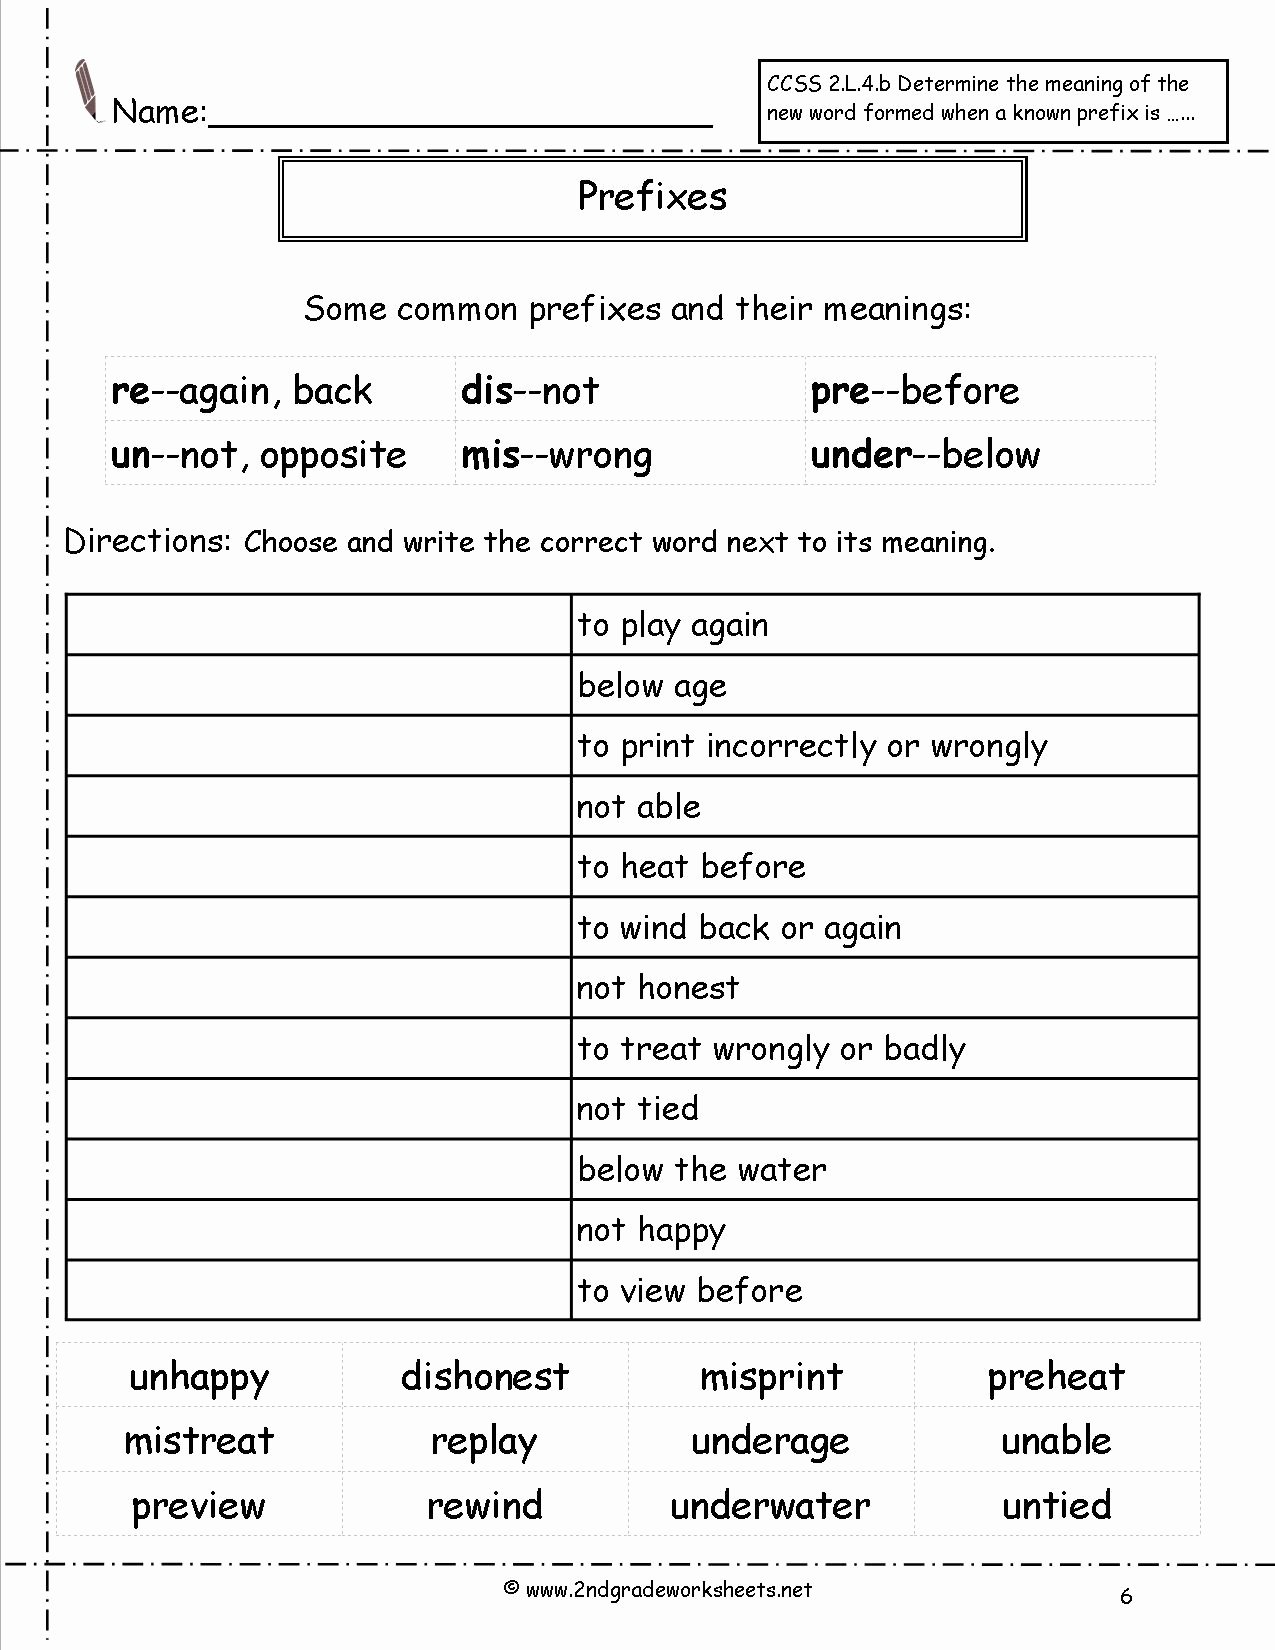 Prefixes Worksheet 2nd Grade Fresh Second Grade Prefixes Worksheets